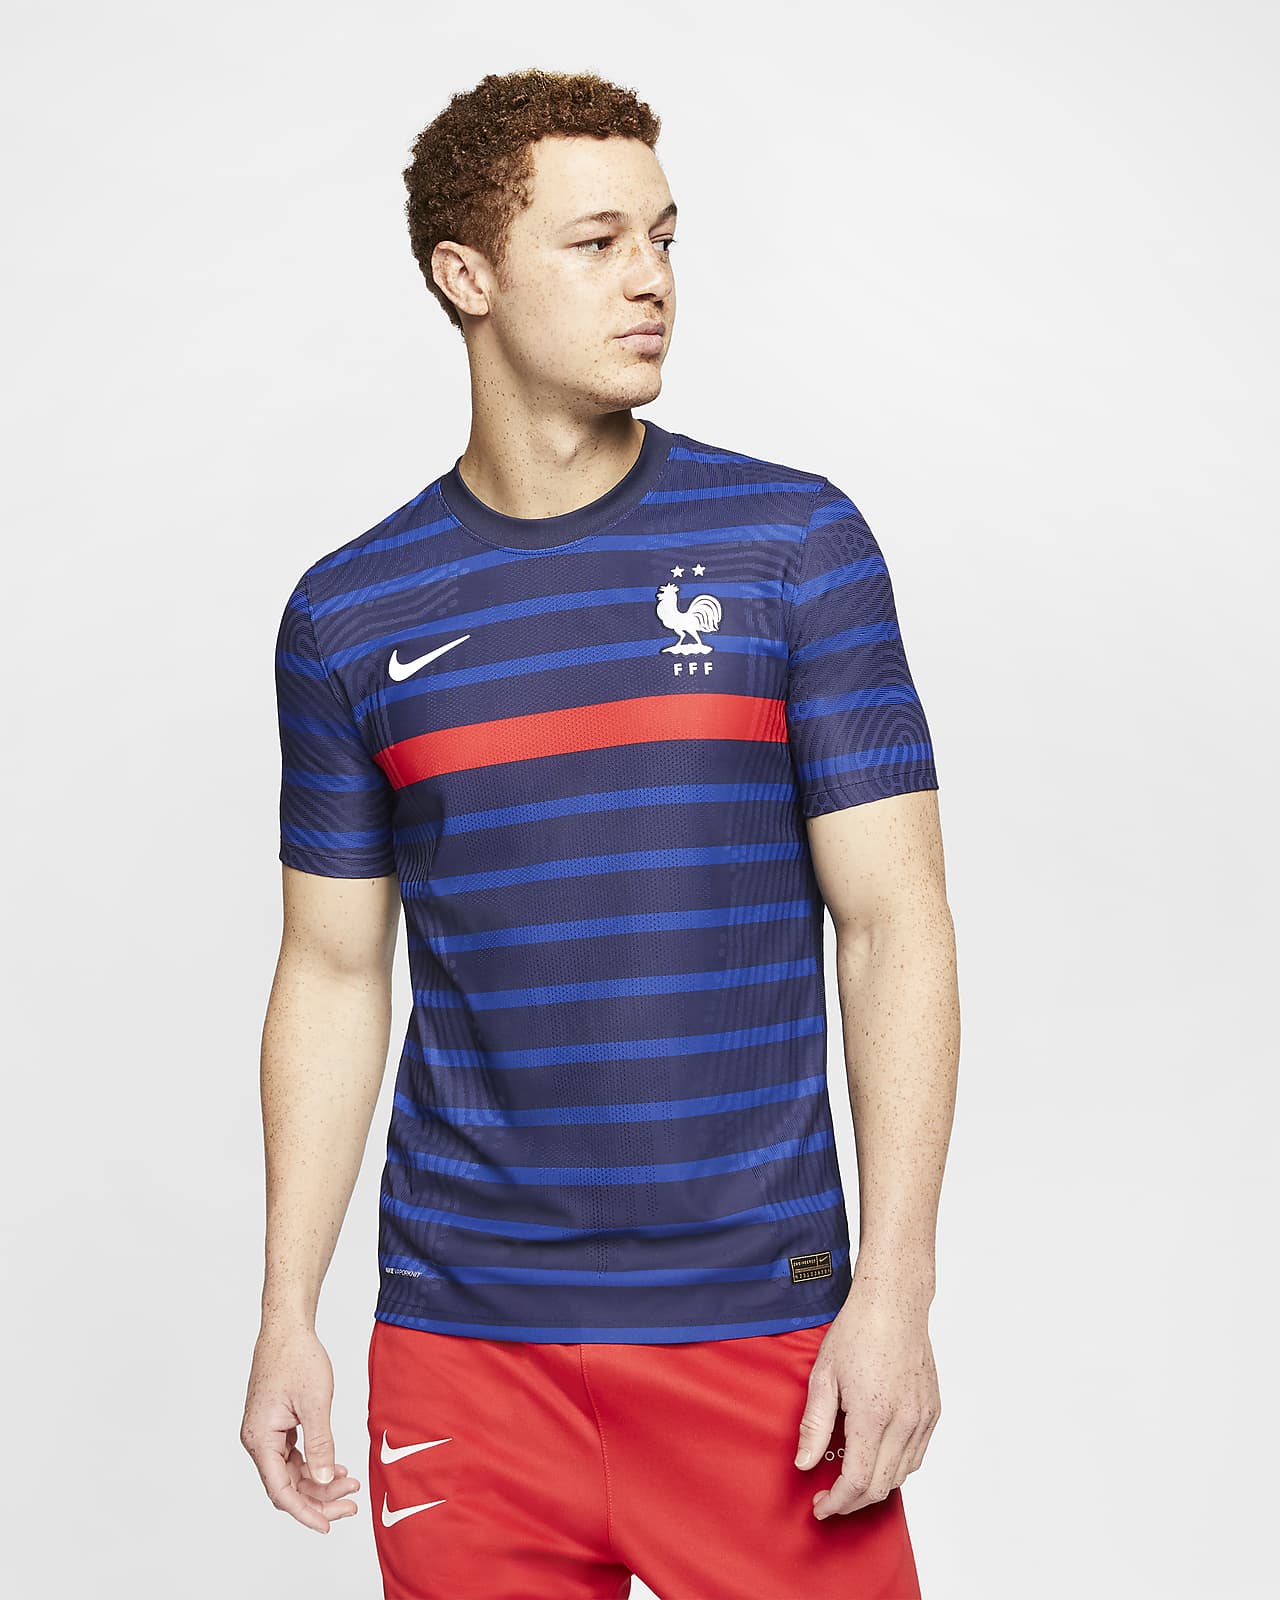 Vapor Match FFF 2020 Camiseta de fútbol Nike ES